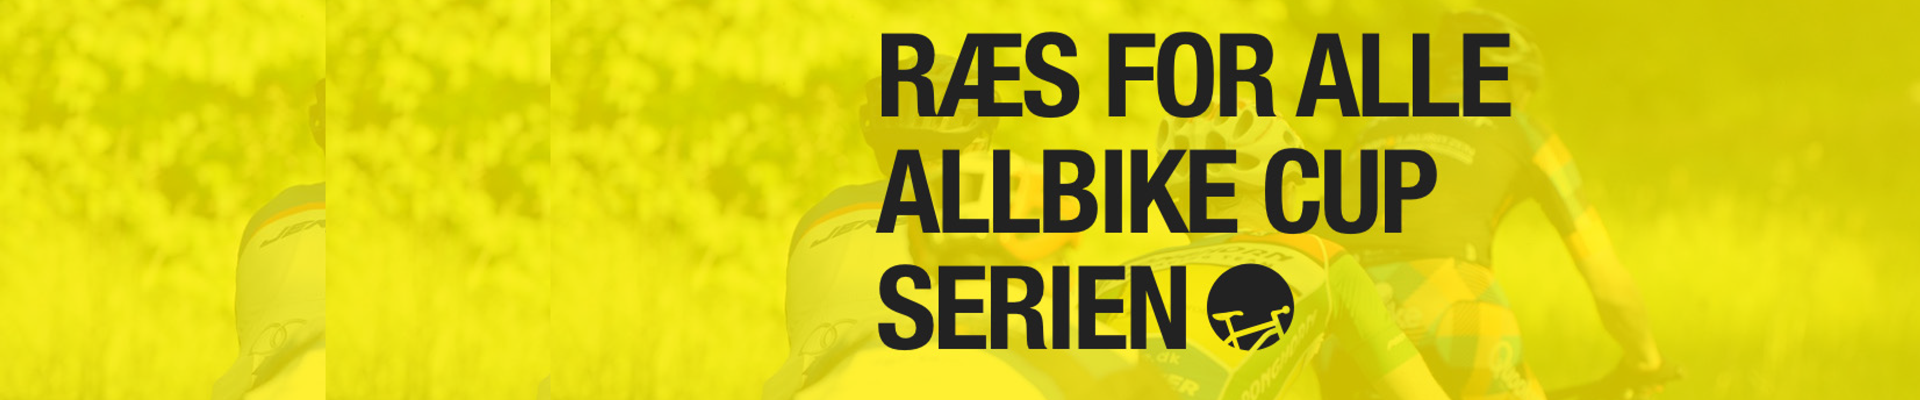 Albike Cuppen 2018 - #5 Aarhus MTB